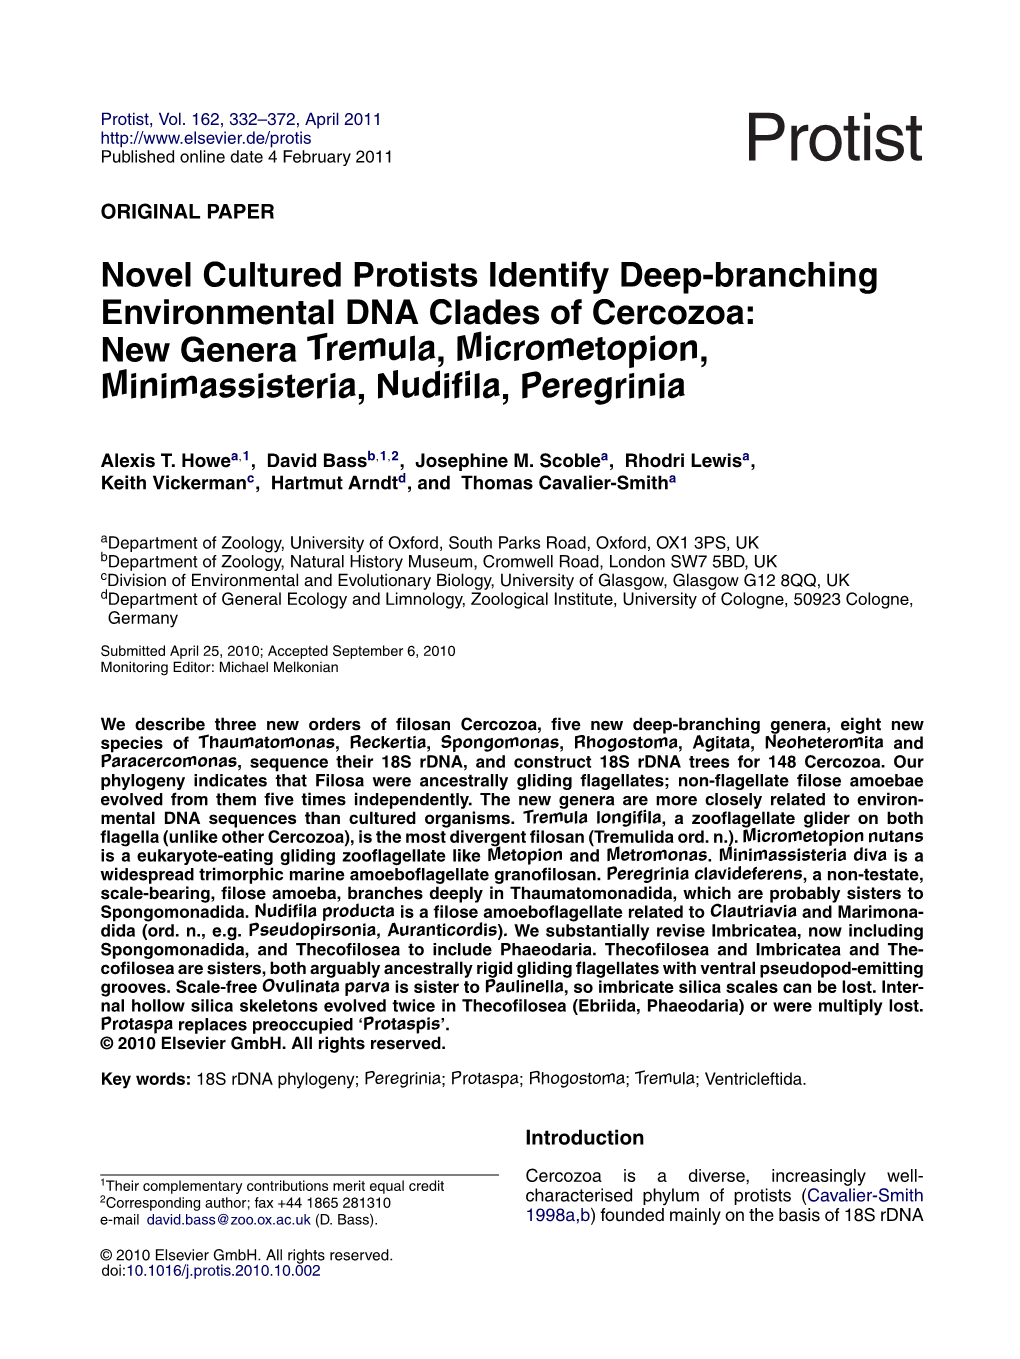 Novel Cultured Protists Identify Deep-Branching Environmental DNA Clades of Cercozoa: New Genera Tremula, Micrometopion, Minimassisteria, Nudiﬁla, Peregrinia